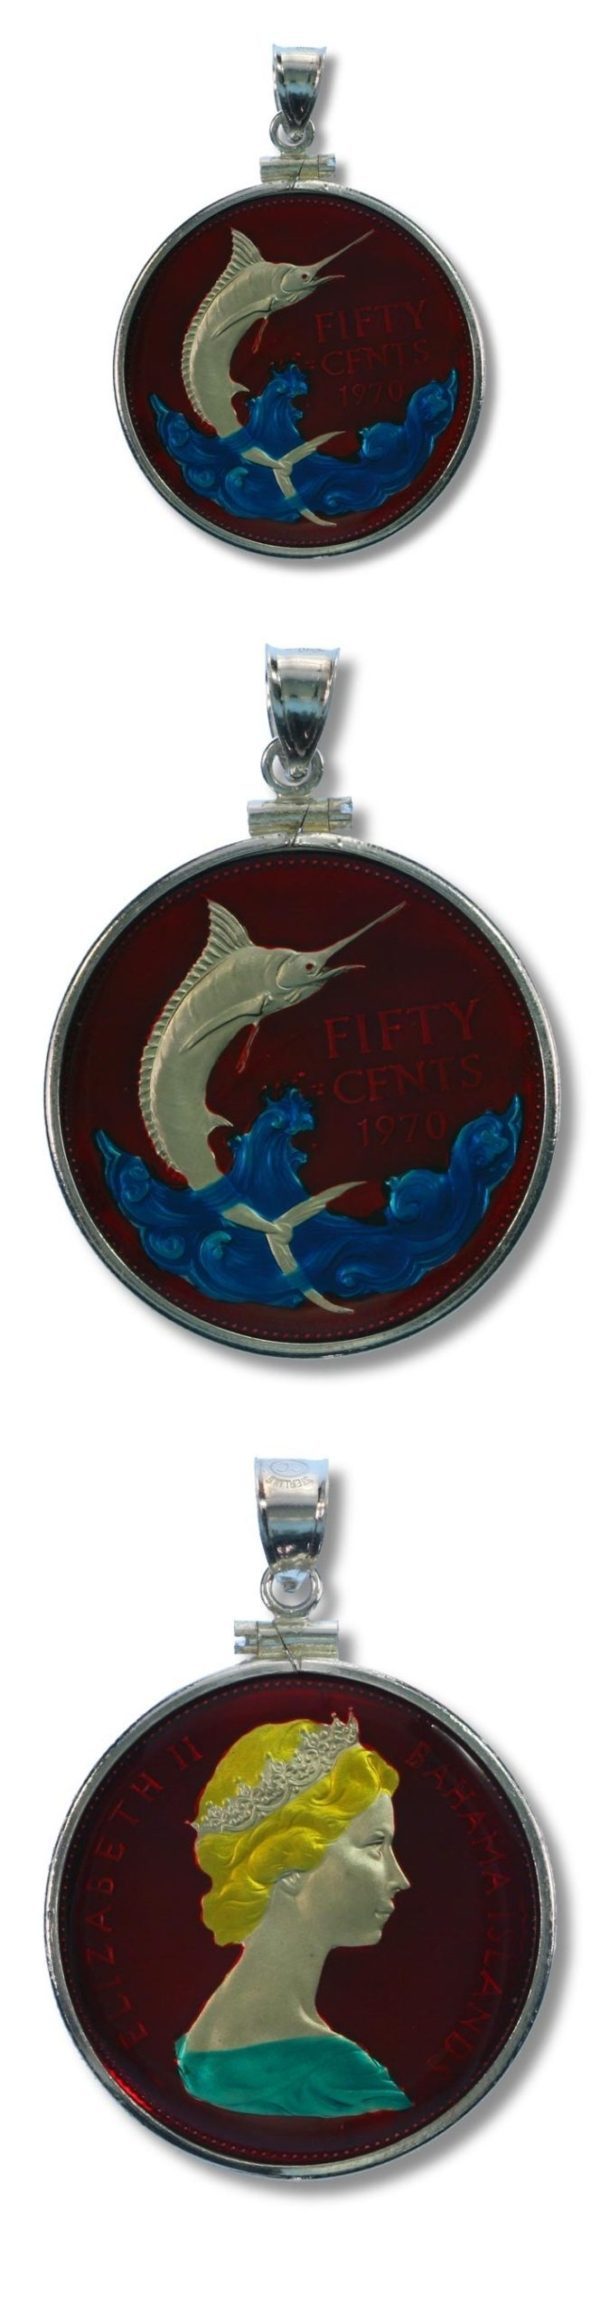 Bahamas - Enameled Jewelry - Coin Pendant - Blue Marlin - 50